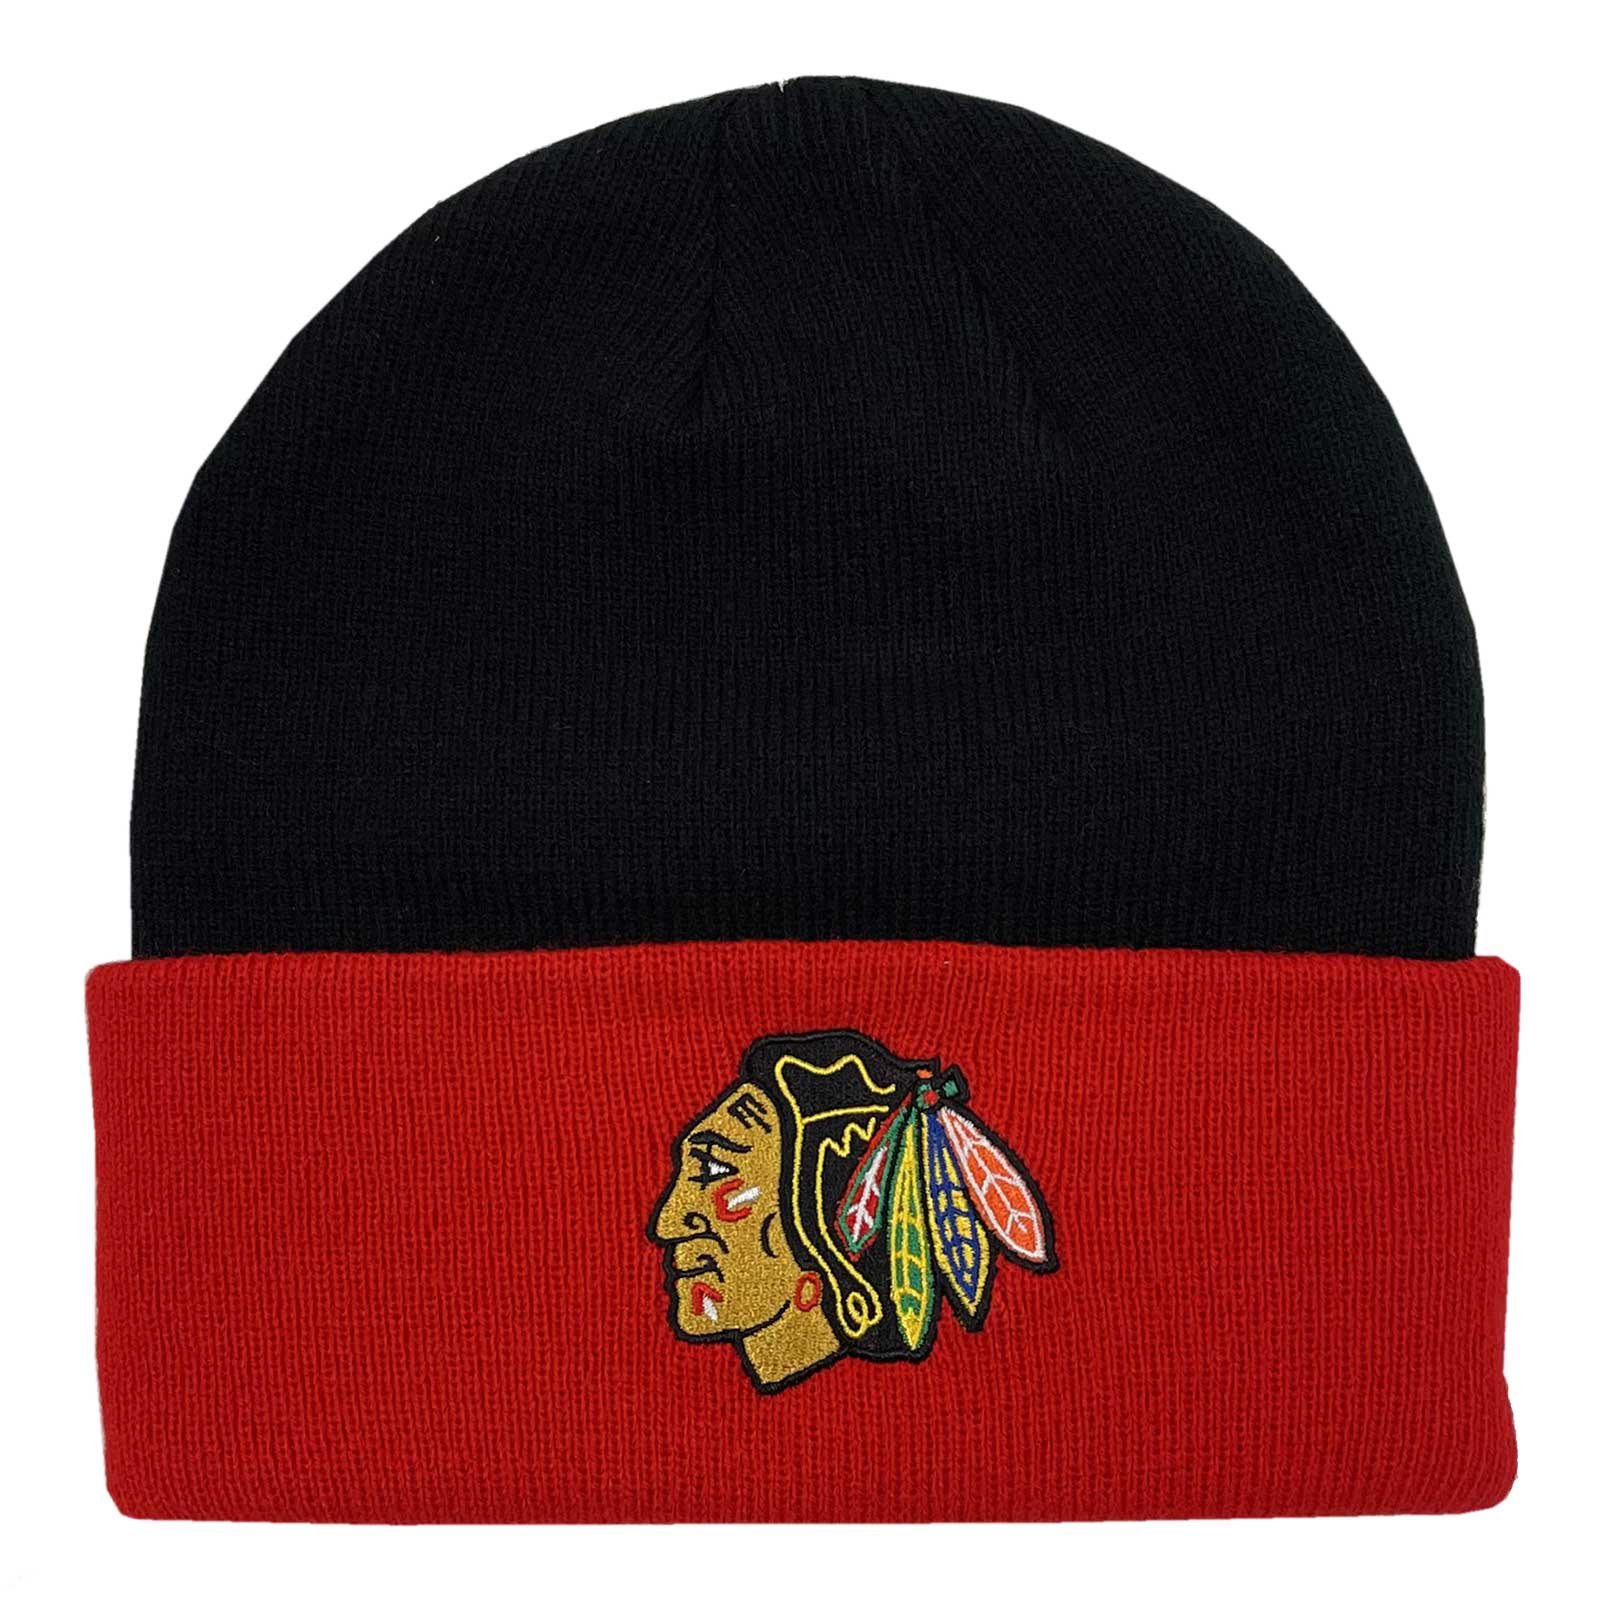 Adidas Men's Chicago Blackhawks NHL Hockey Knit Hat Beanie Skull Cap Winter Pom - image 1 of 2